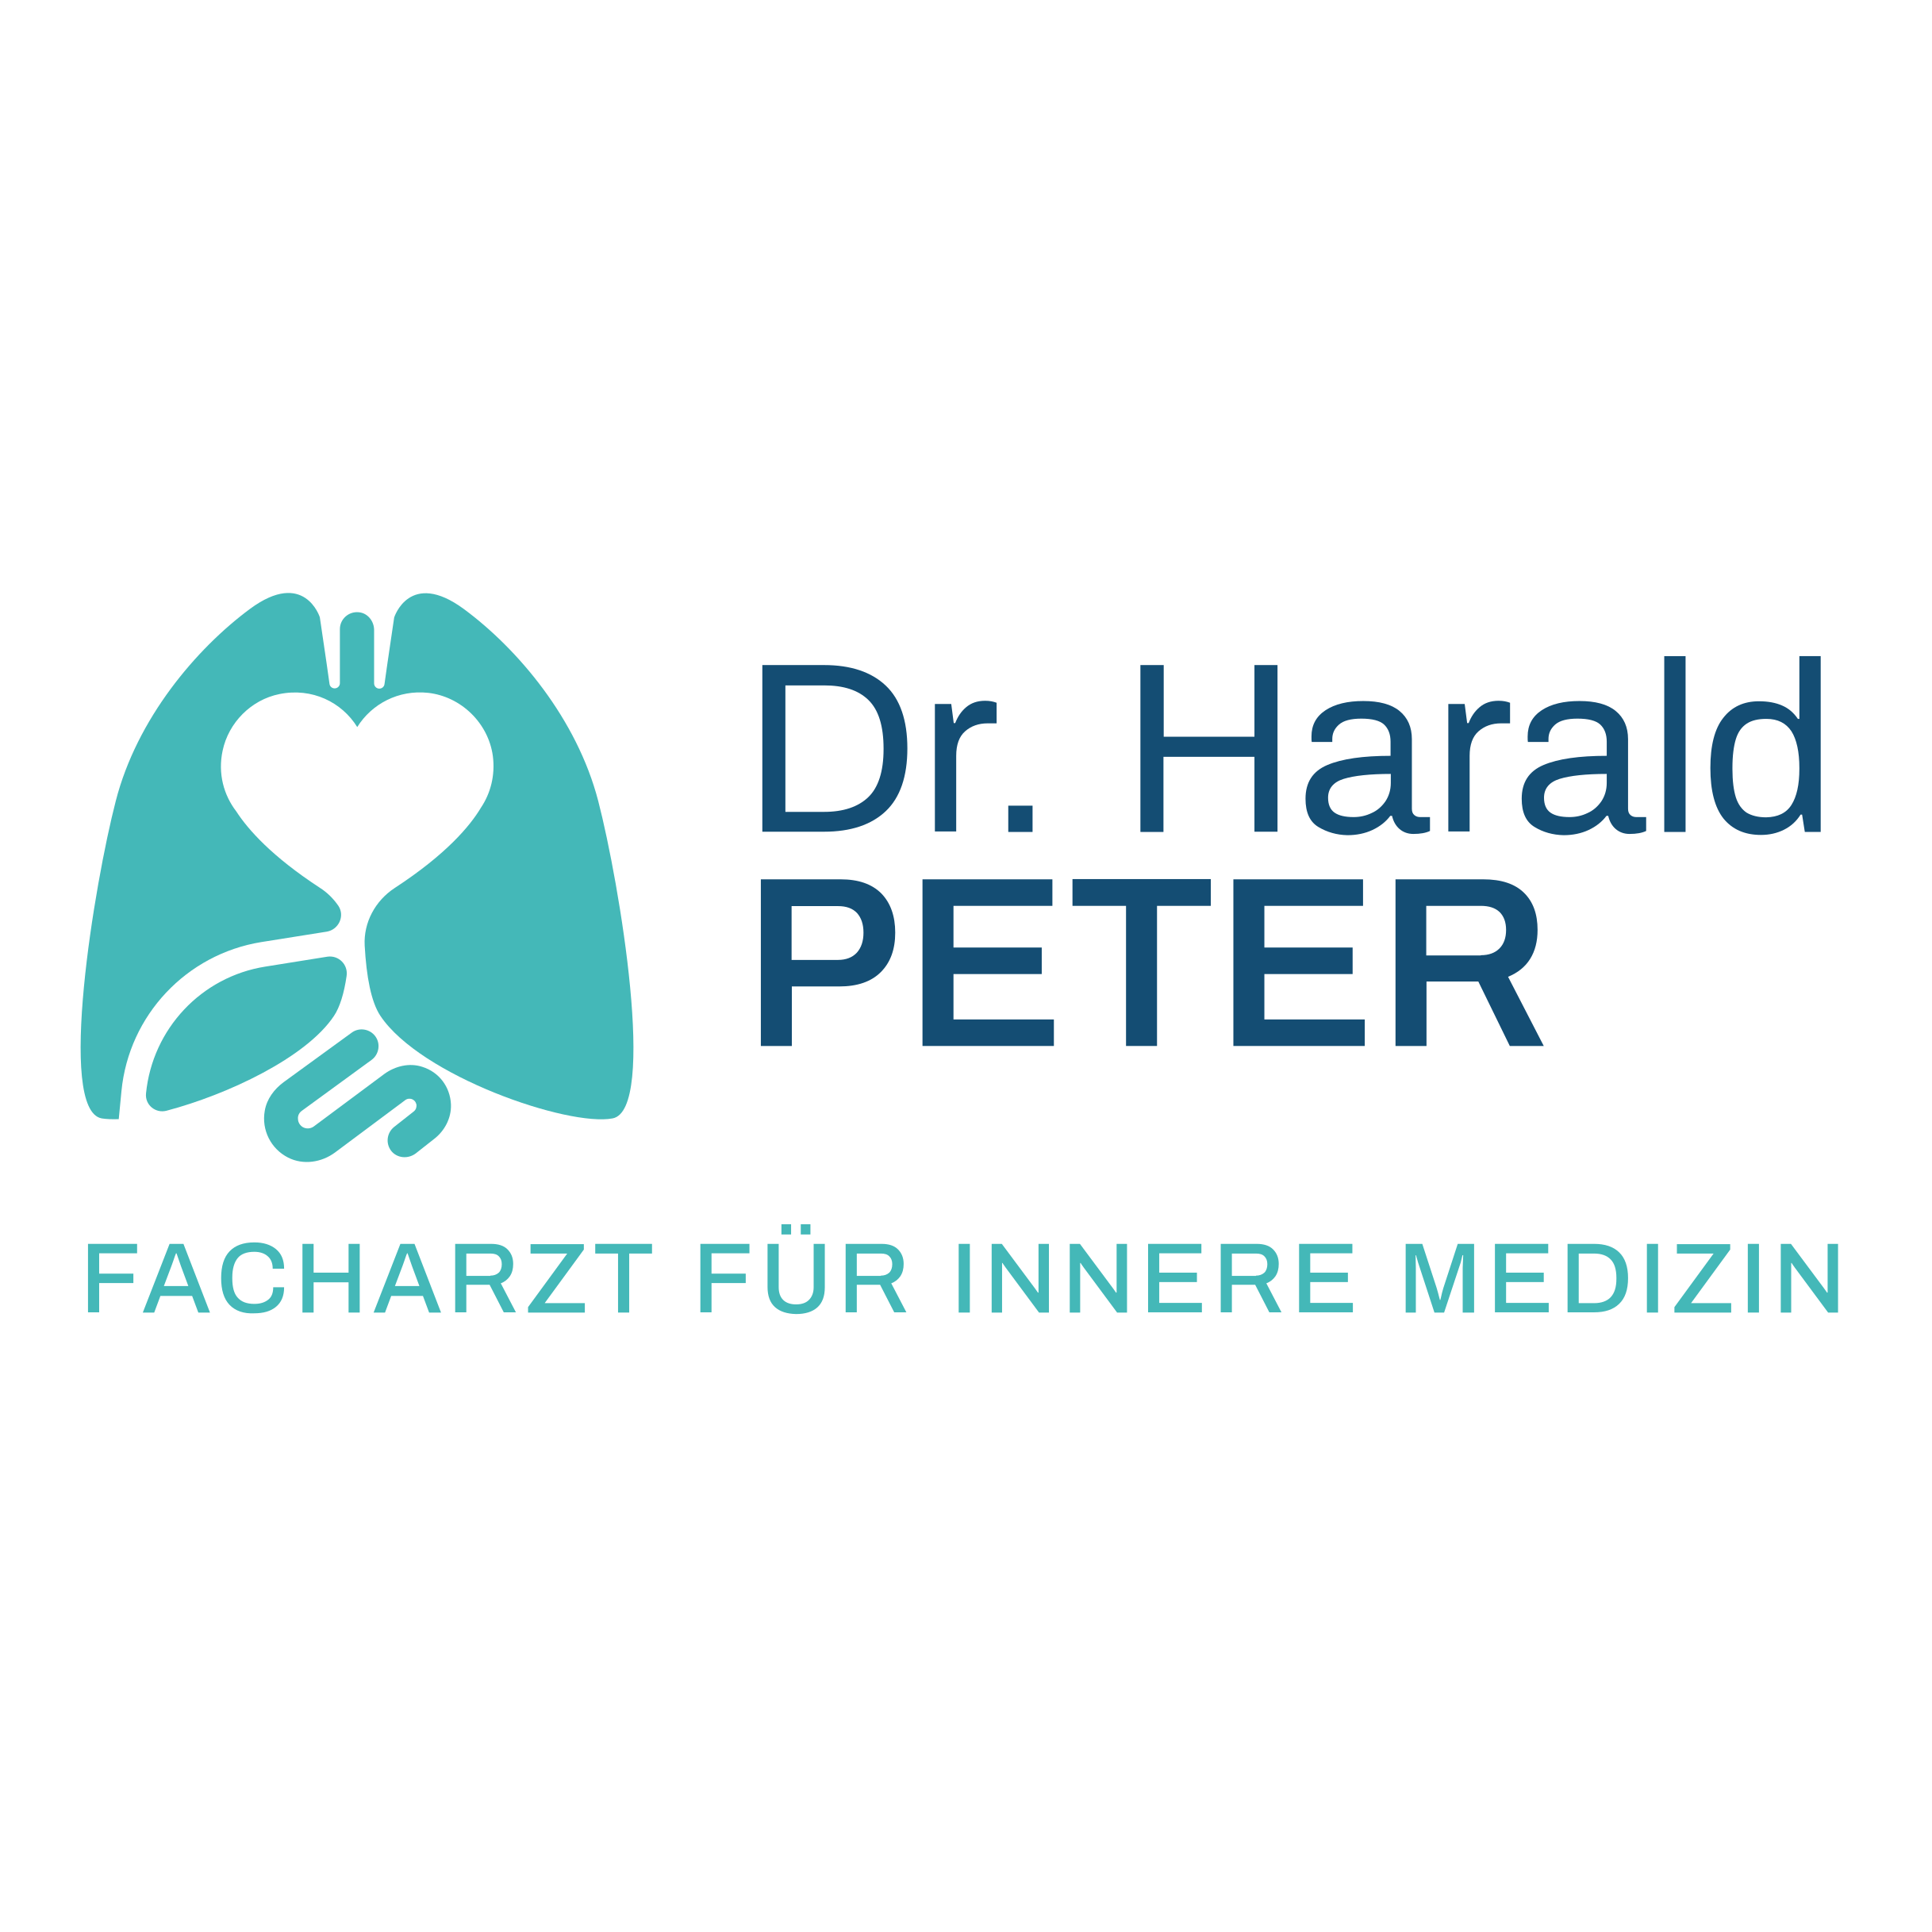 Dr. Harald PETER Logo